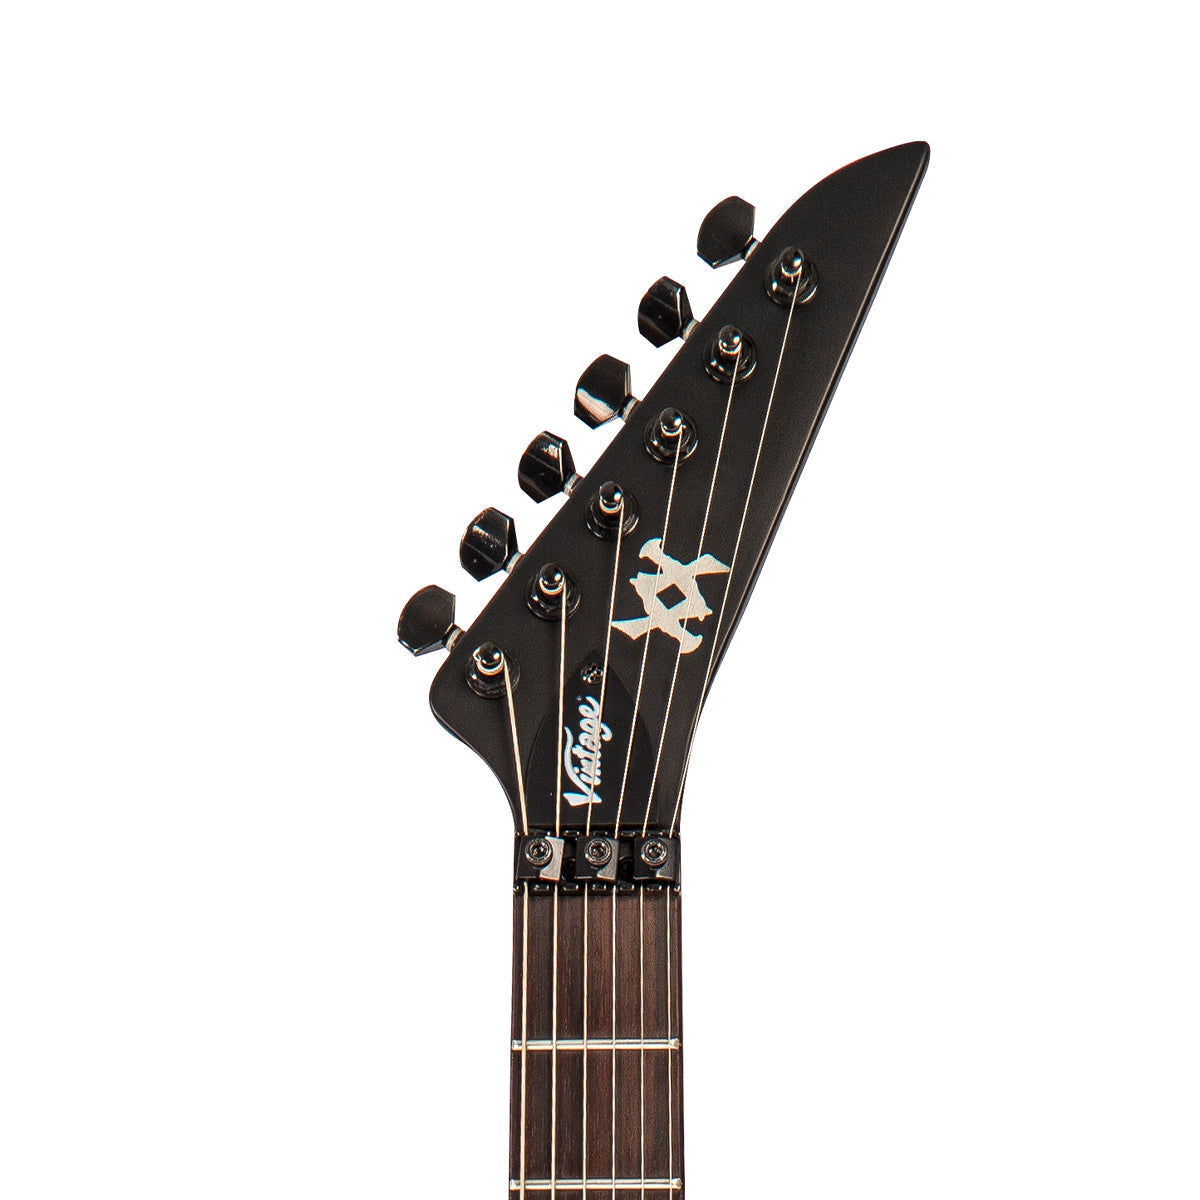 Vintage VMX Series WARP Electric Guitar ~ Satin Black, Electric Guitar for sale at Richards Guitars.